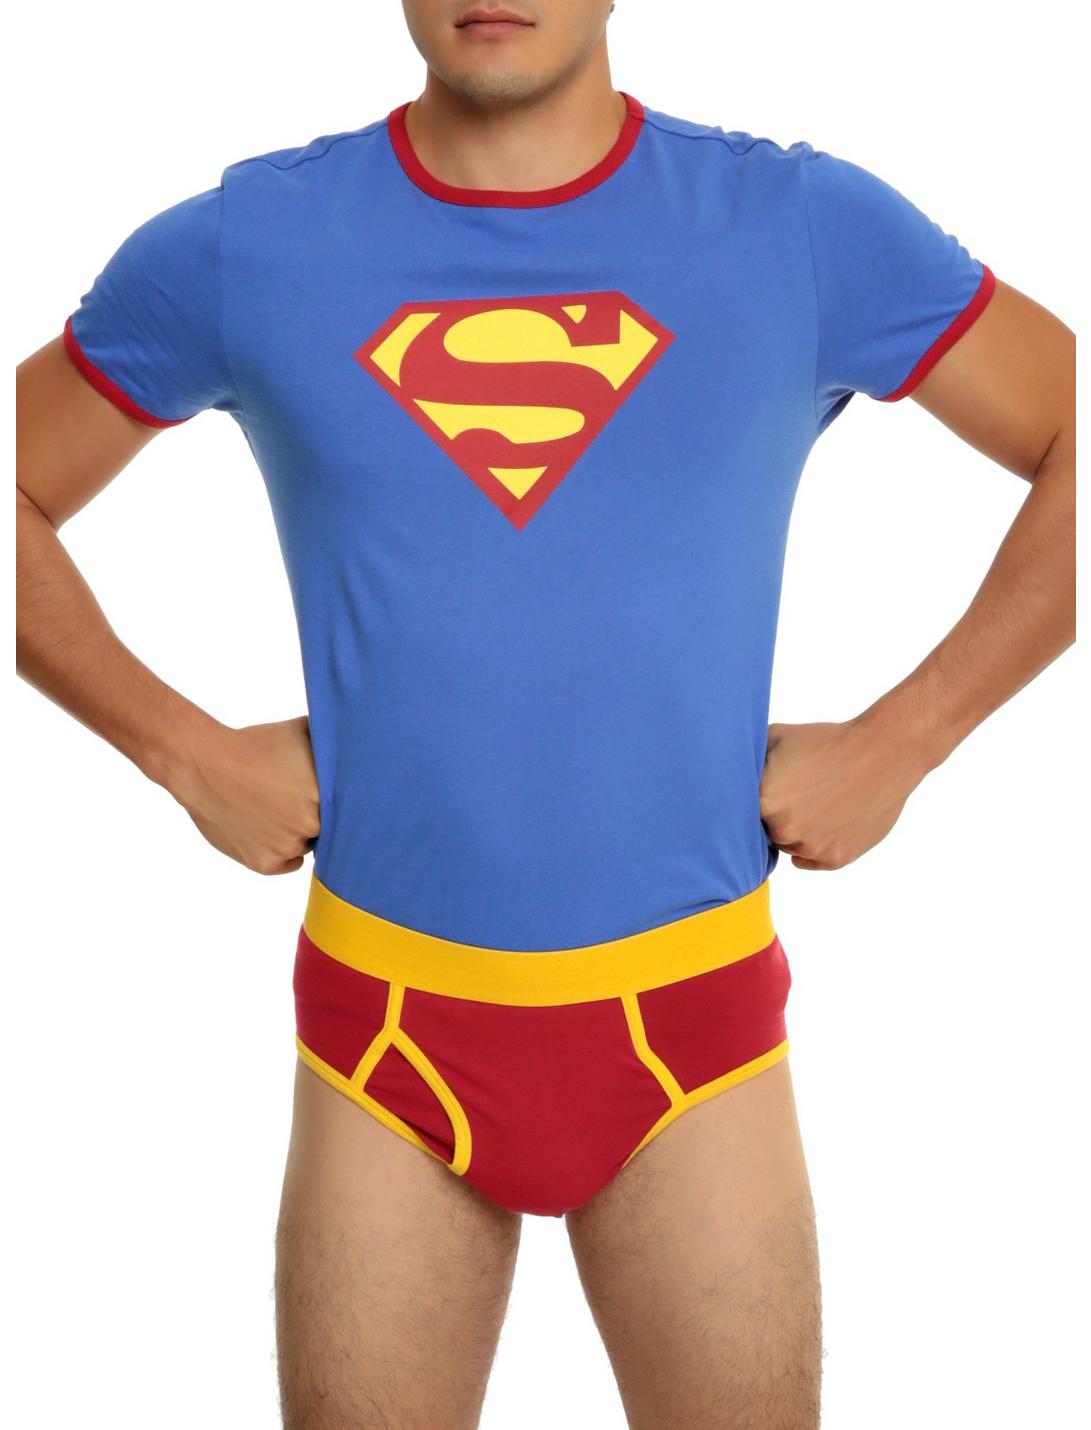 Underoos DC Comics Superman Guys Underwear Set, BLACK, hi-res